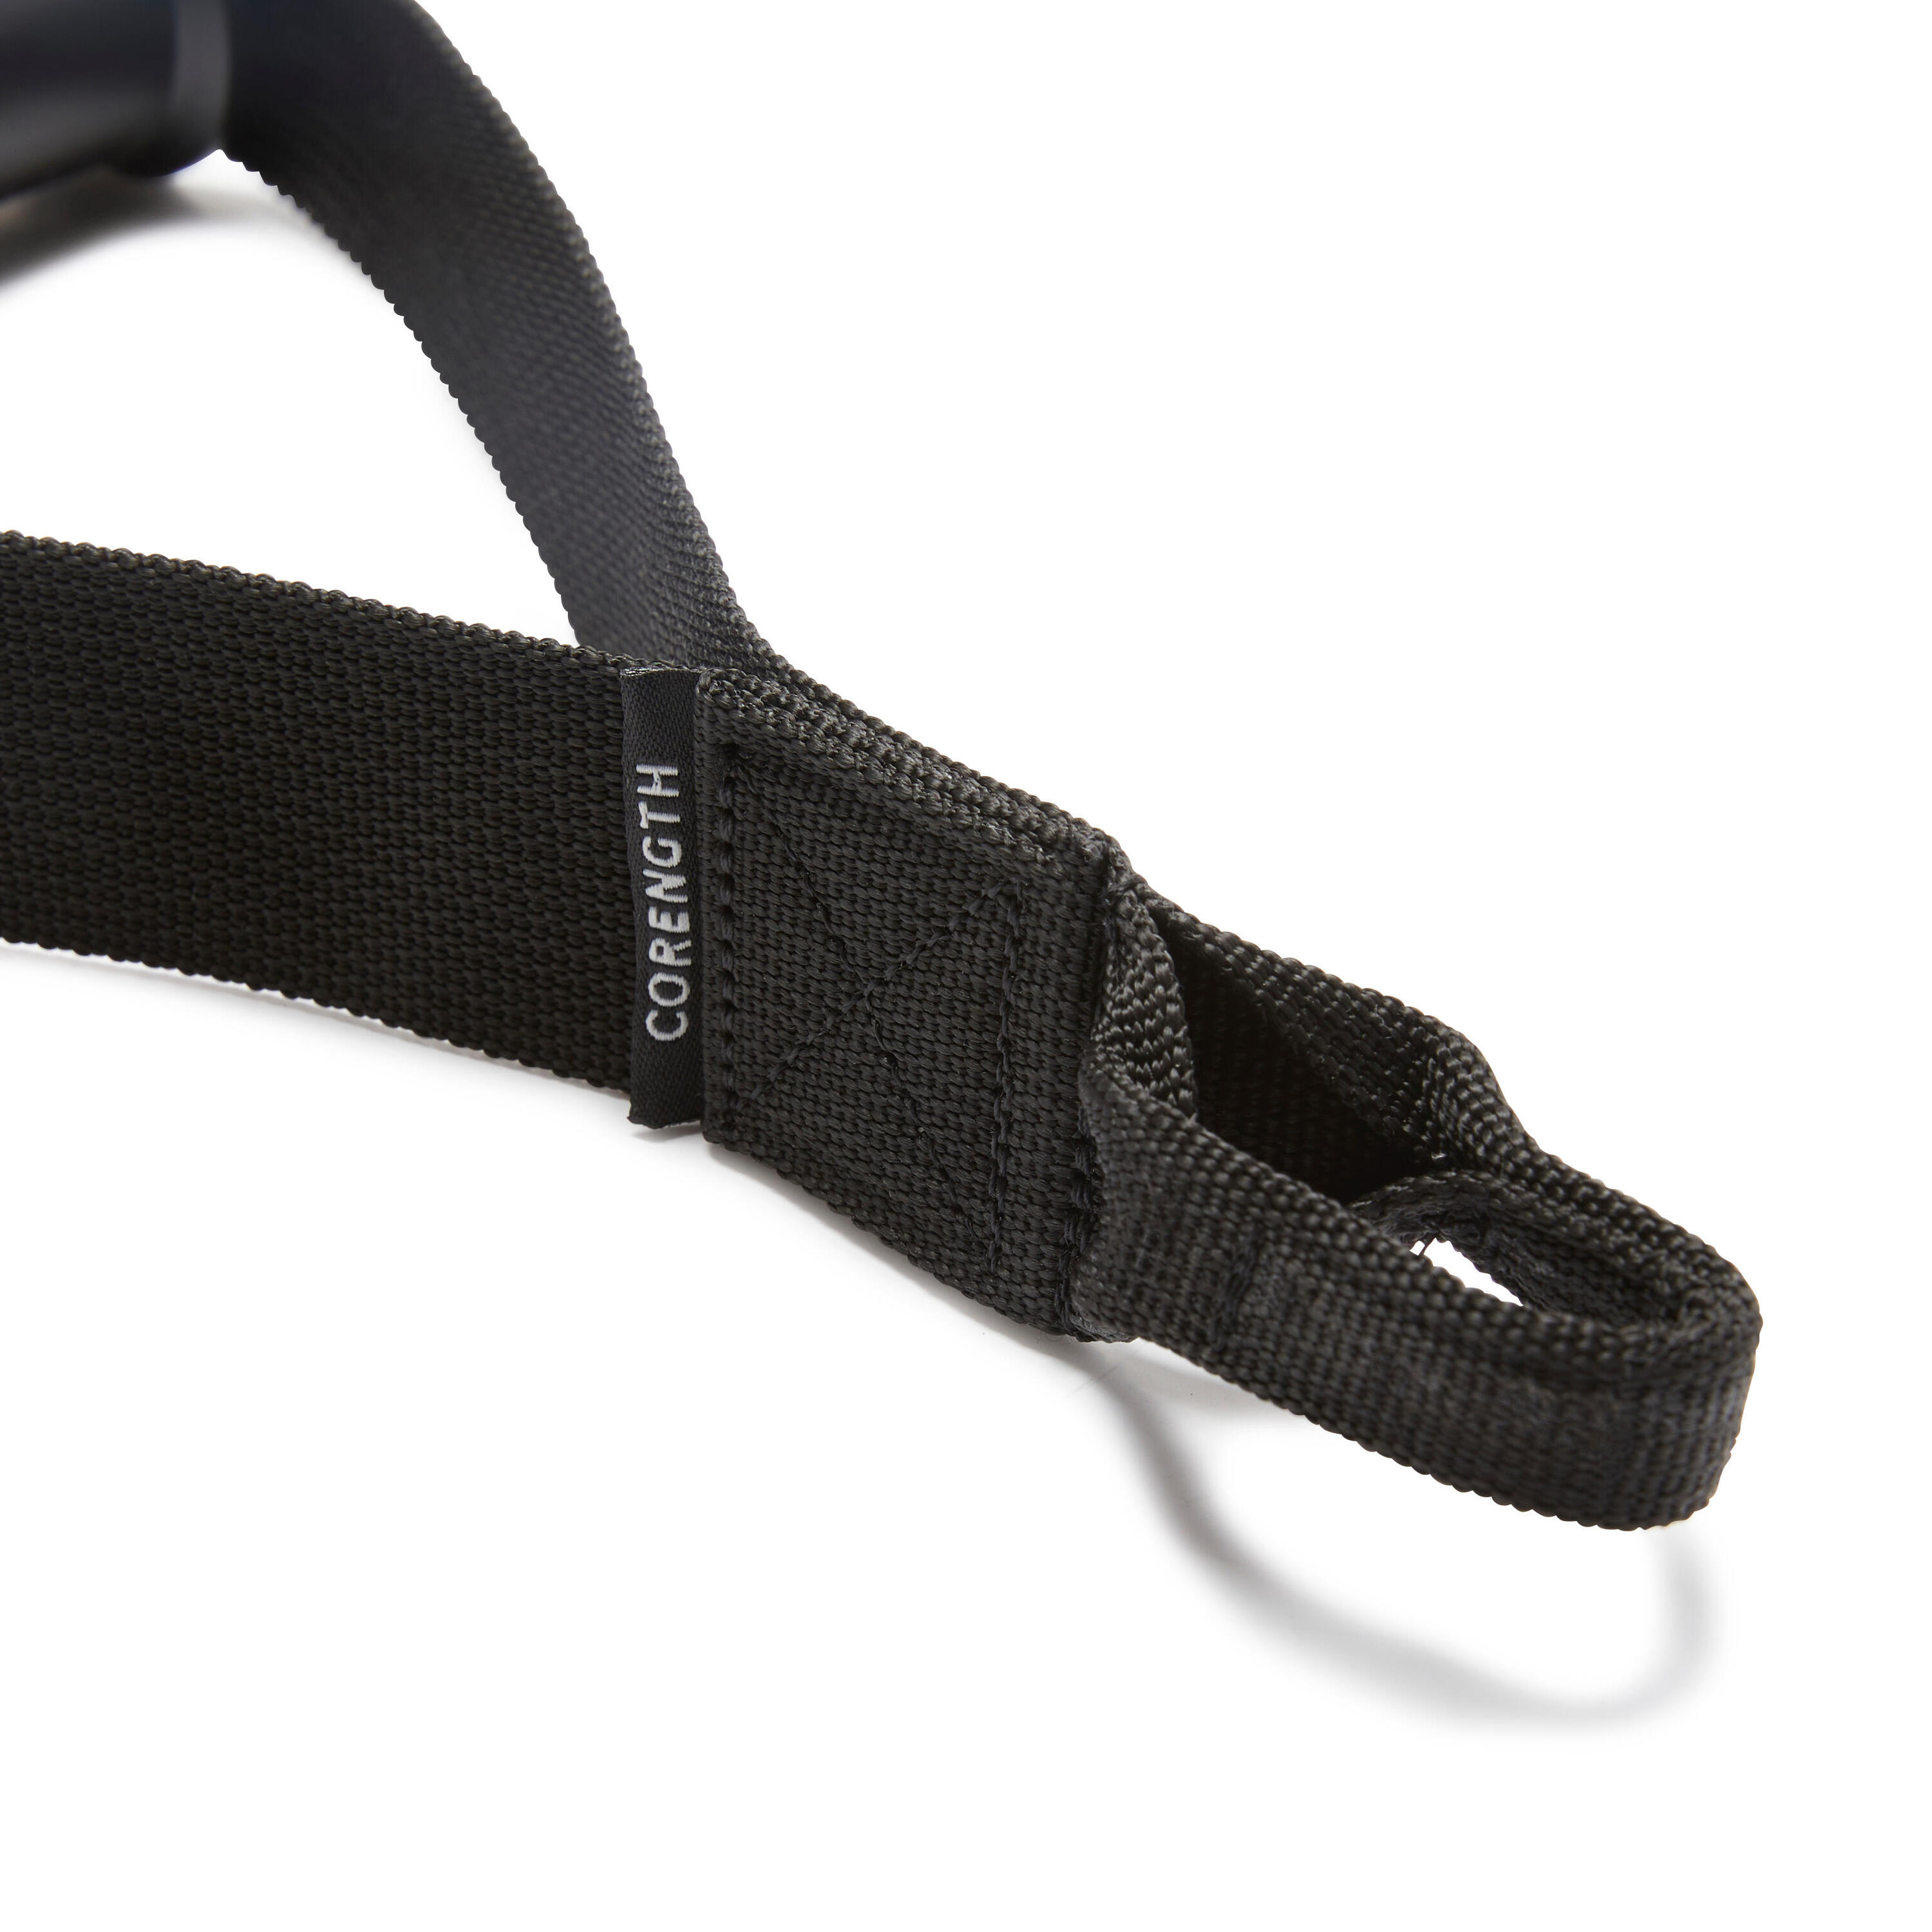 Weight Training Belt with Dual Nylon Closure - Black CORENGTH